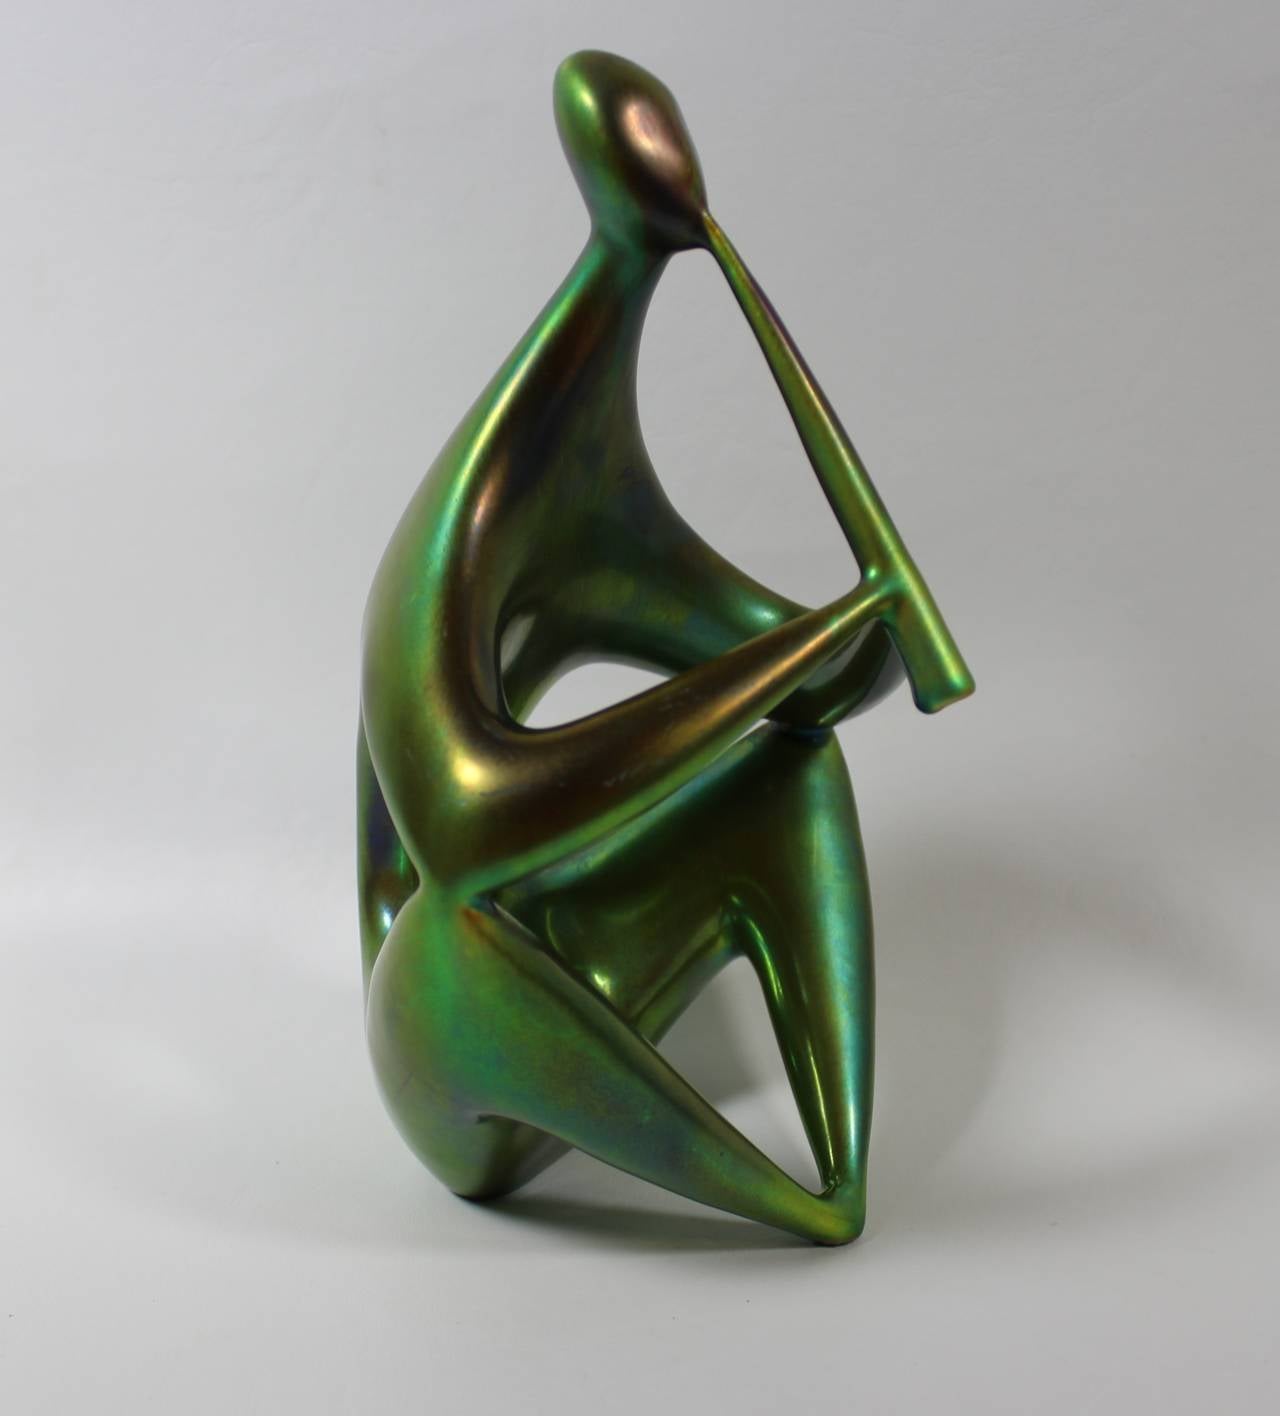 Zsolnay Ceramic Figurine, Mid-Century Modern

Signed Zsolnay Ceramic Flute Player in Eosin glaze.